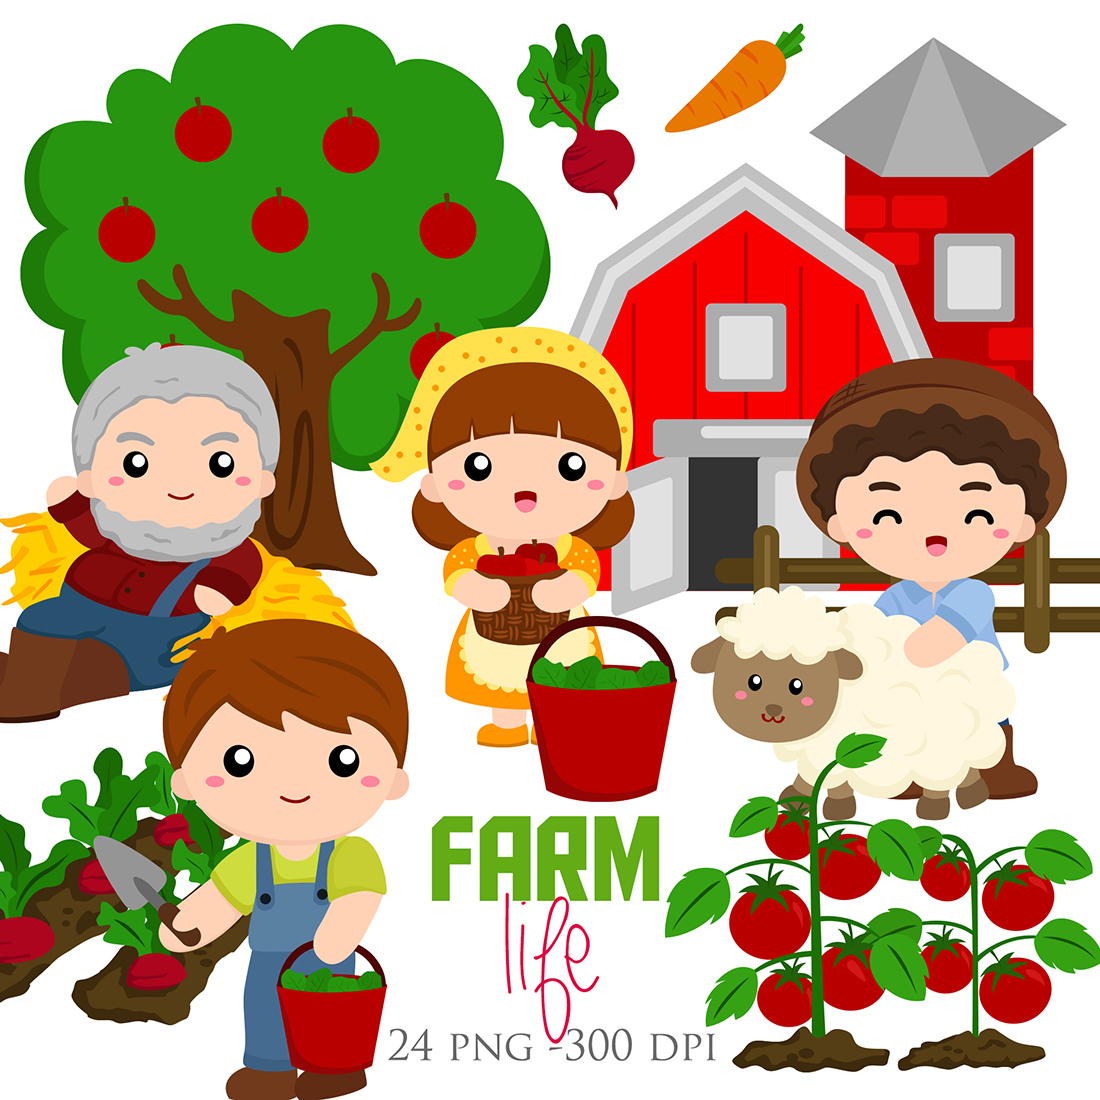 Kids and Farmer Family Farm Life Illustration Vector Clipart Cartoon cover image.